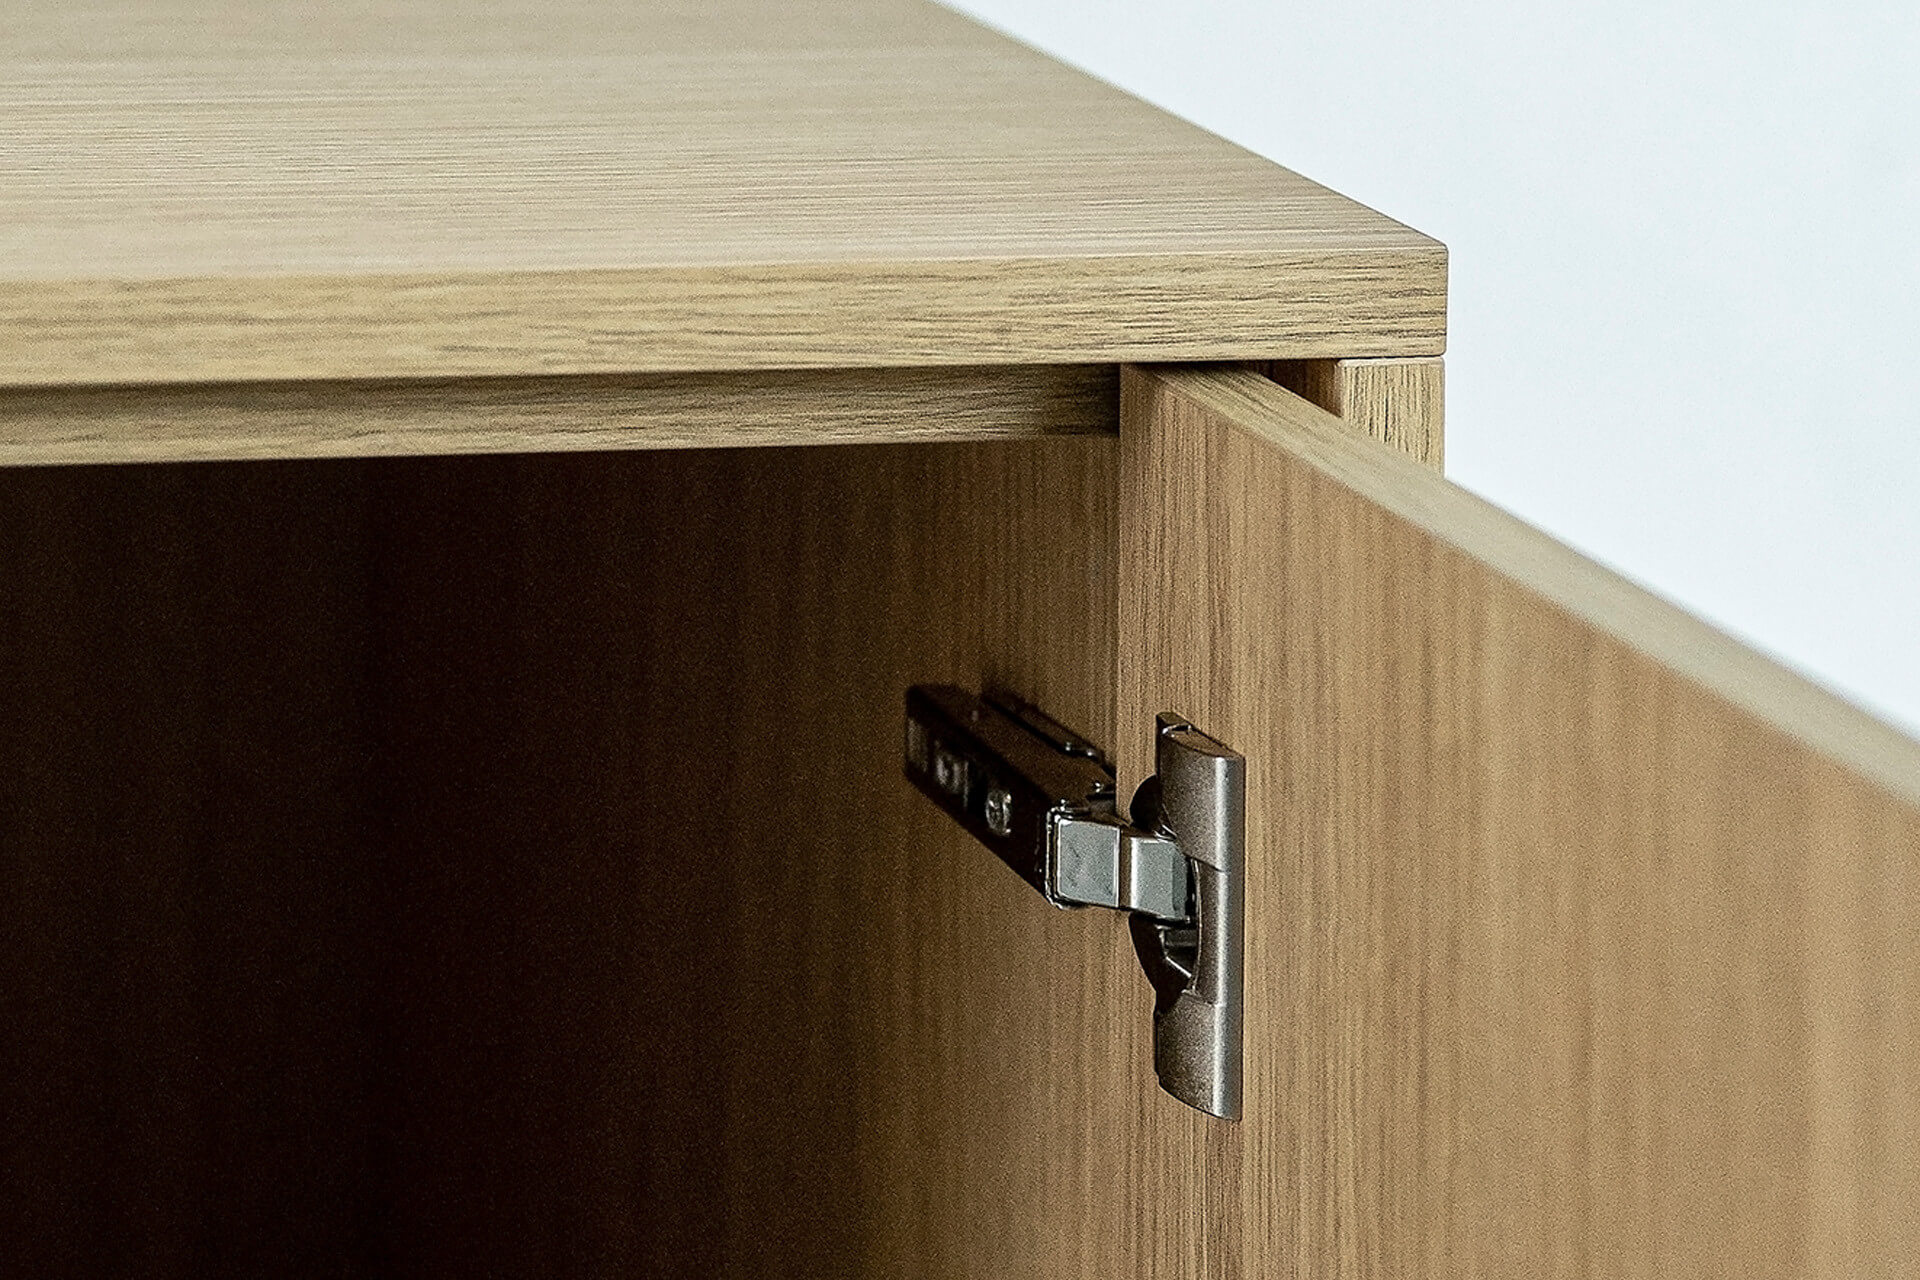 Blum hinge in a custom-made TV cabinet in natural oak essential, from maatkastenonline